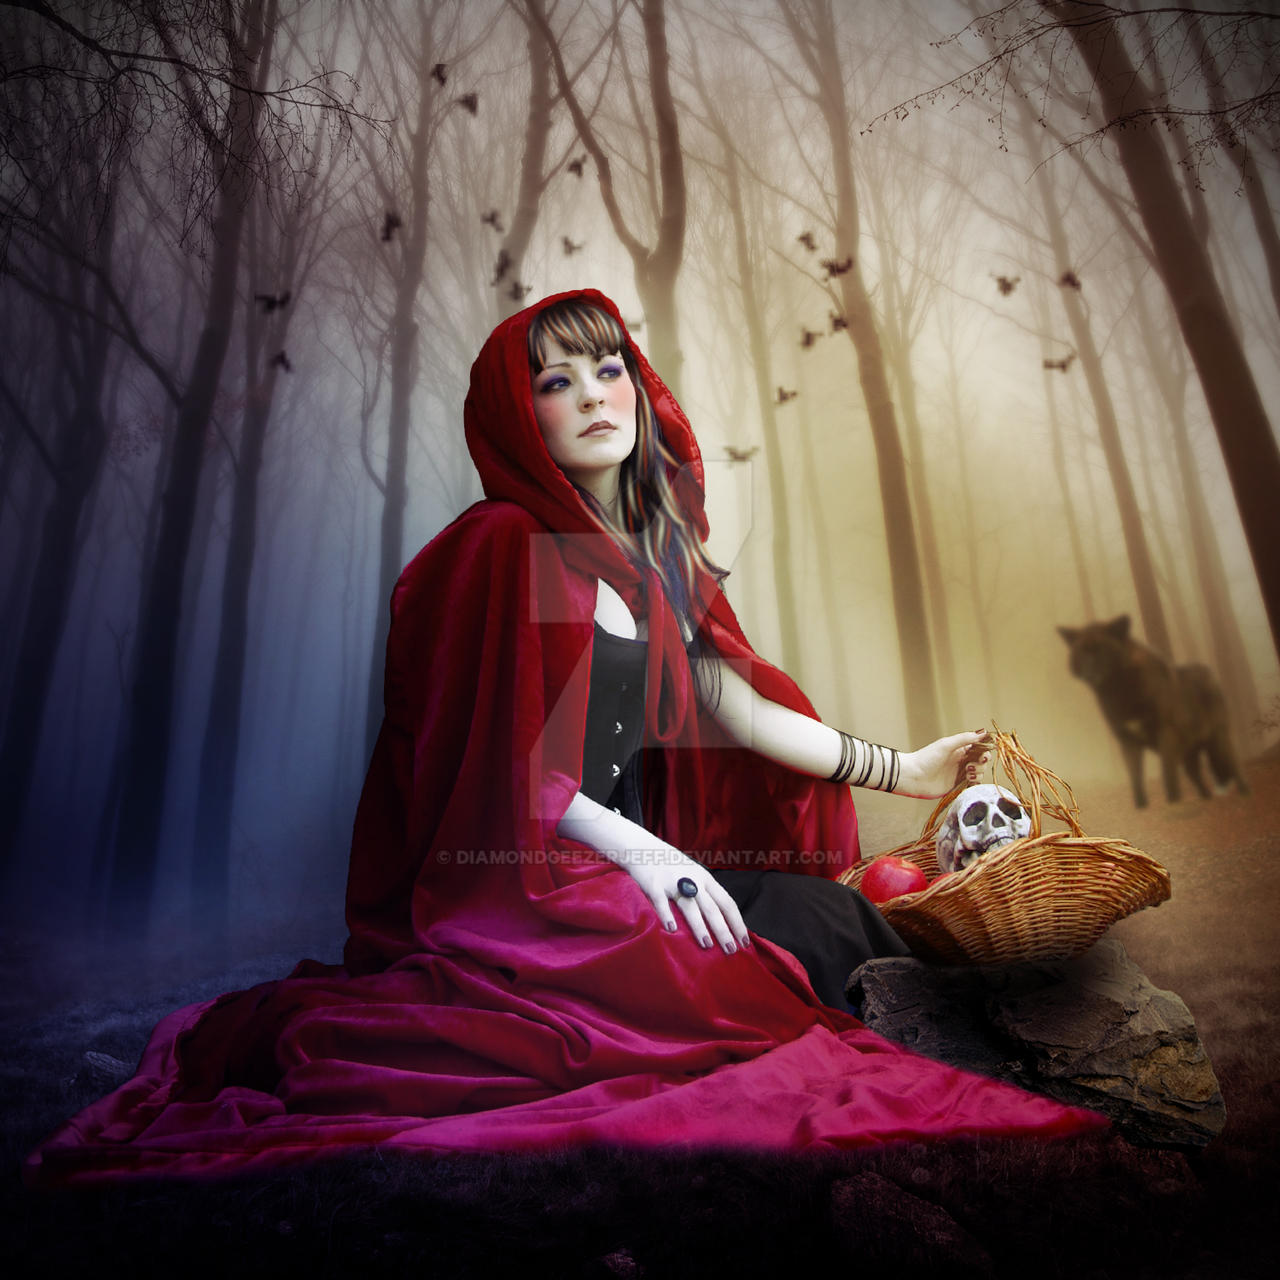 Red Riding Hood by diamondgeezerjeff on DeviantArt